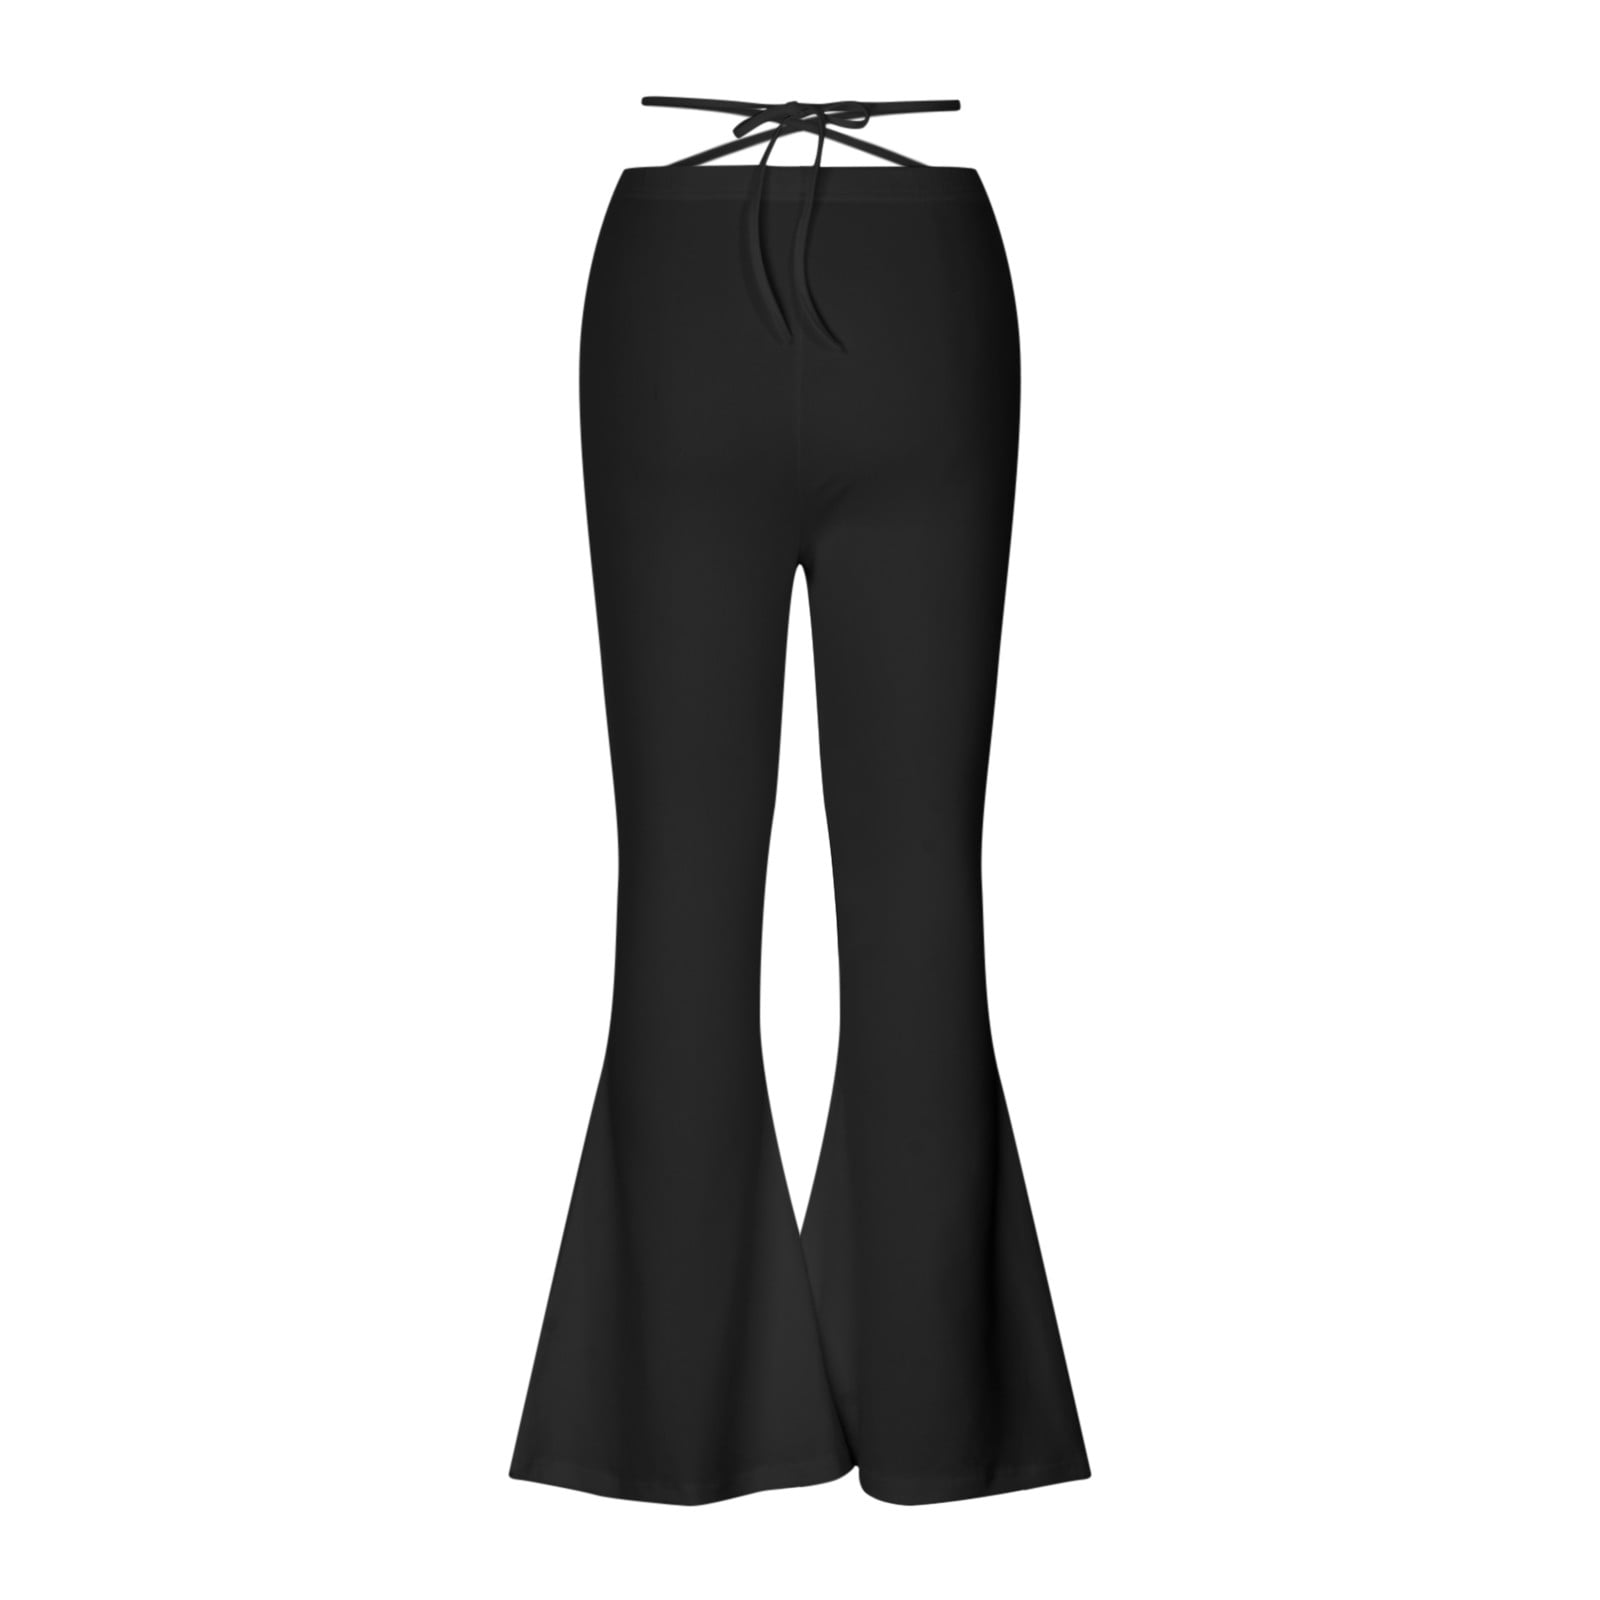 Reduce Price Hfyihgf Women's Bootcut Yoga Pants-Flare Leggings for Women  High Waisted Crossover V-Back Workout Lounge Bell Bottom Jazz Dress Pants(Khaki,XXL)  